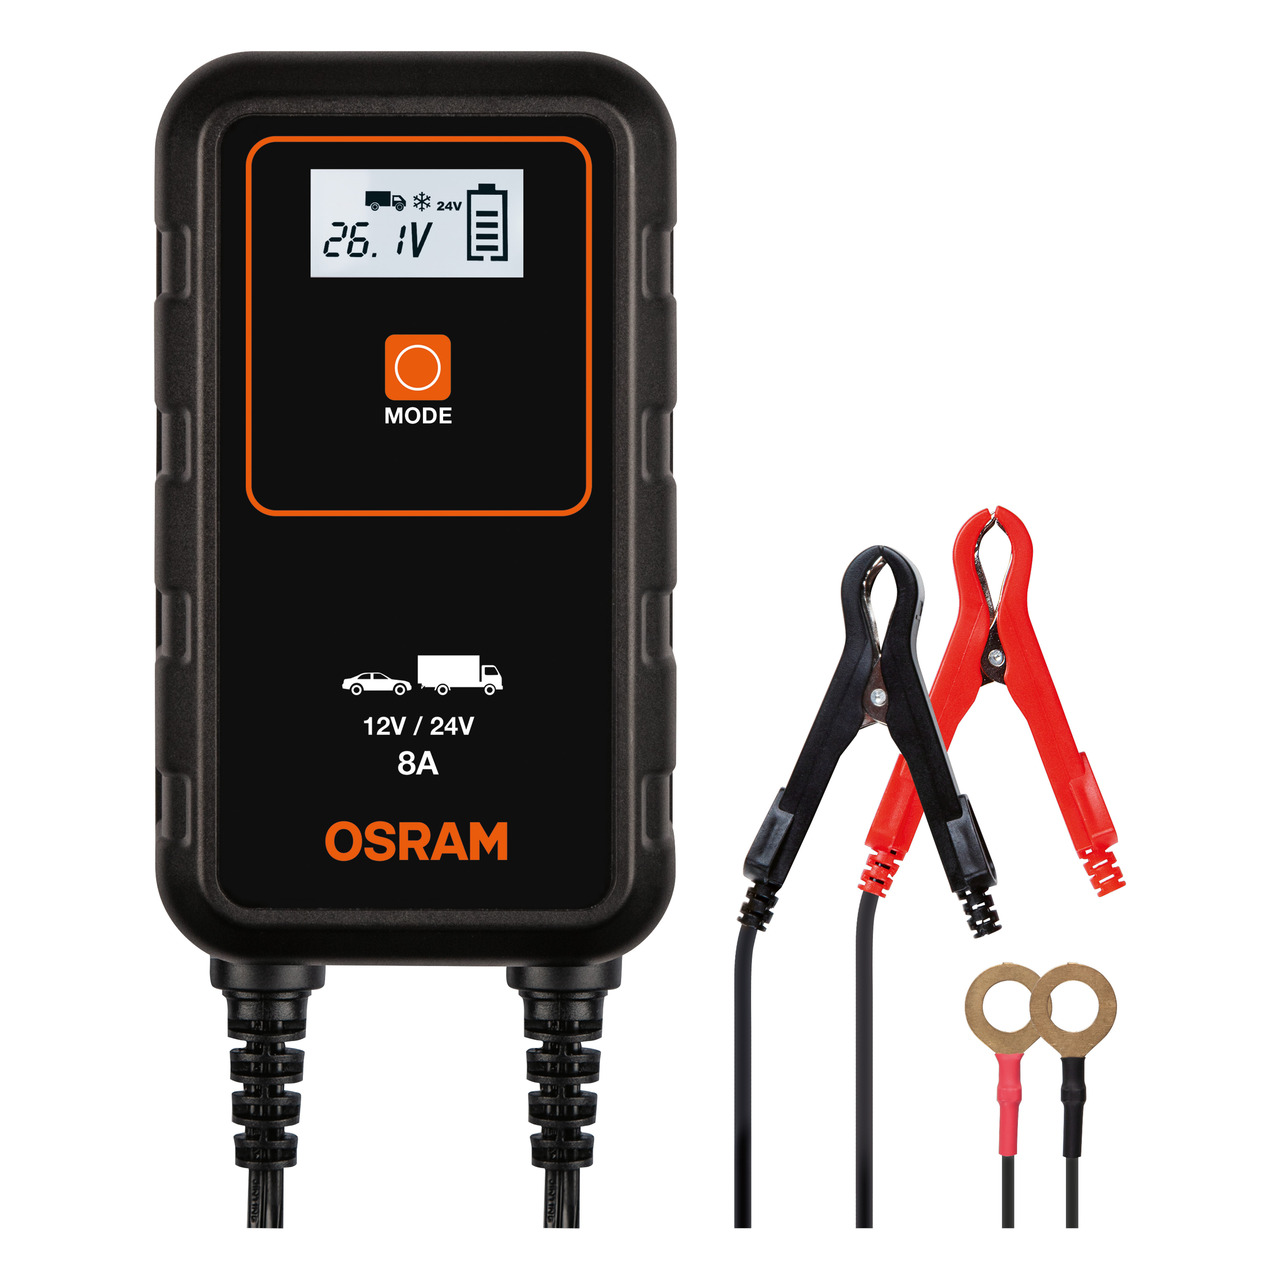 OSRAM Kfz-Batterieladegerät BATTERYcharge 908- 12-24 V- 8 A- für Autos-Klein-LKW